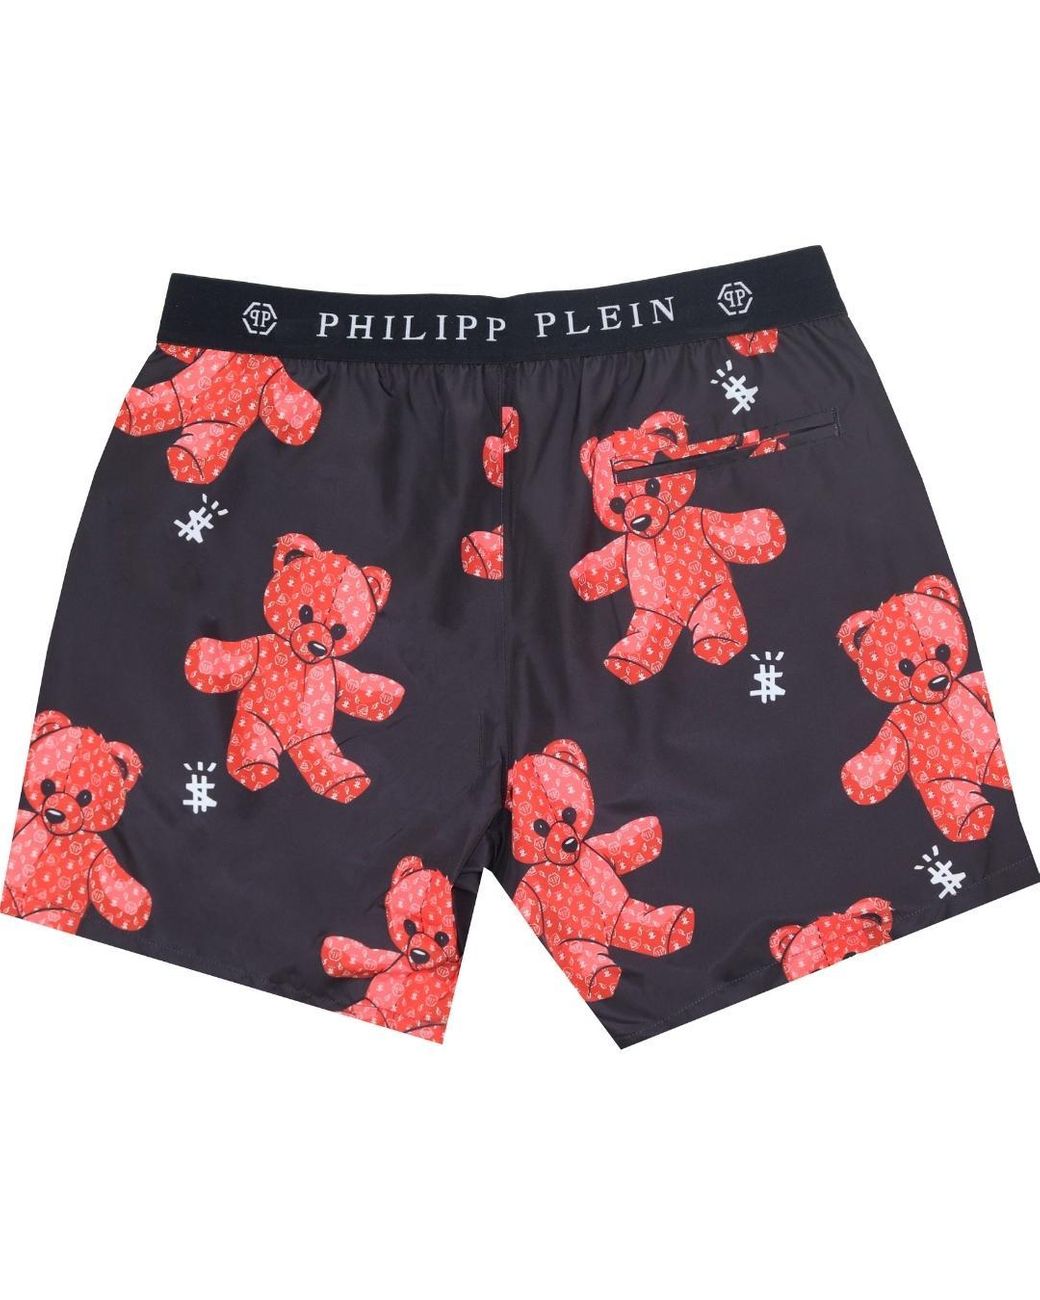 Philipp Plein Cupp03 M0199 Black Swim Shorts for Men | Lyst